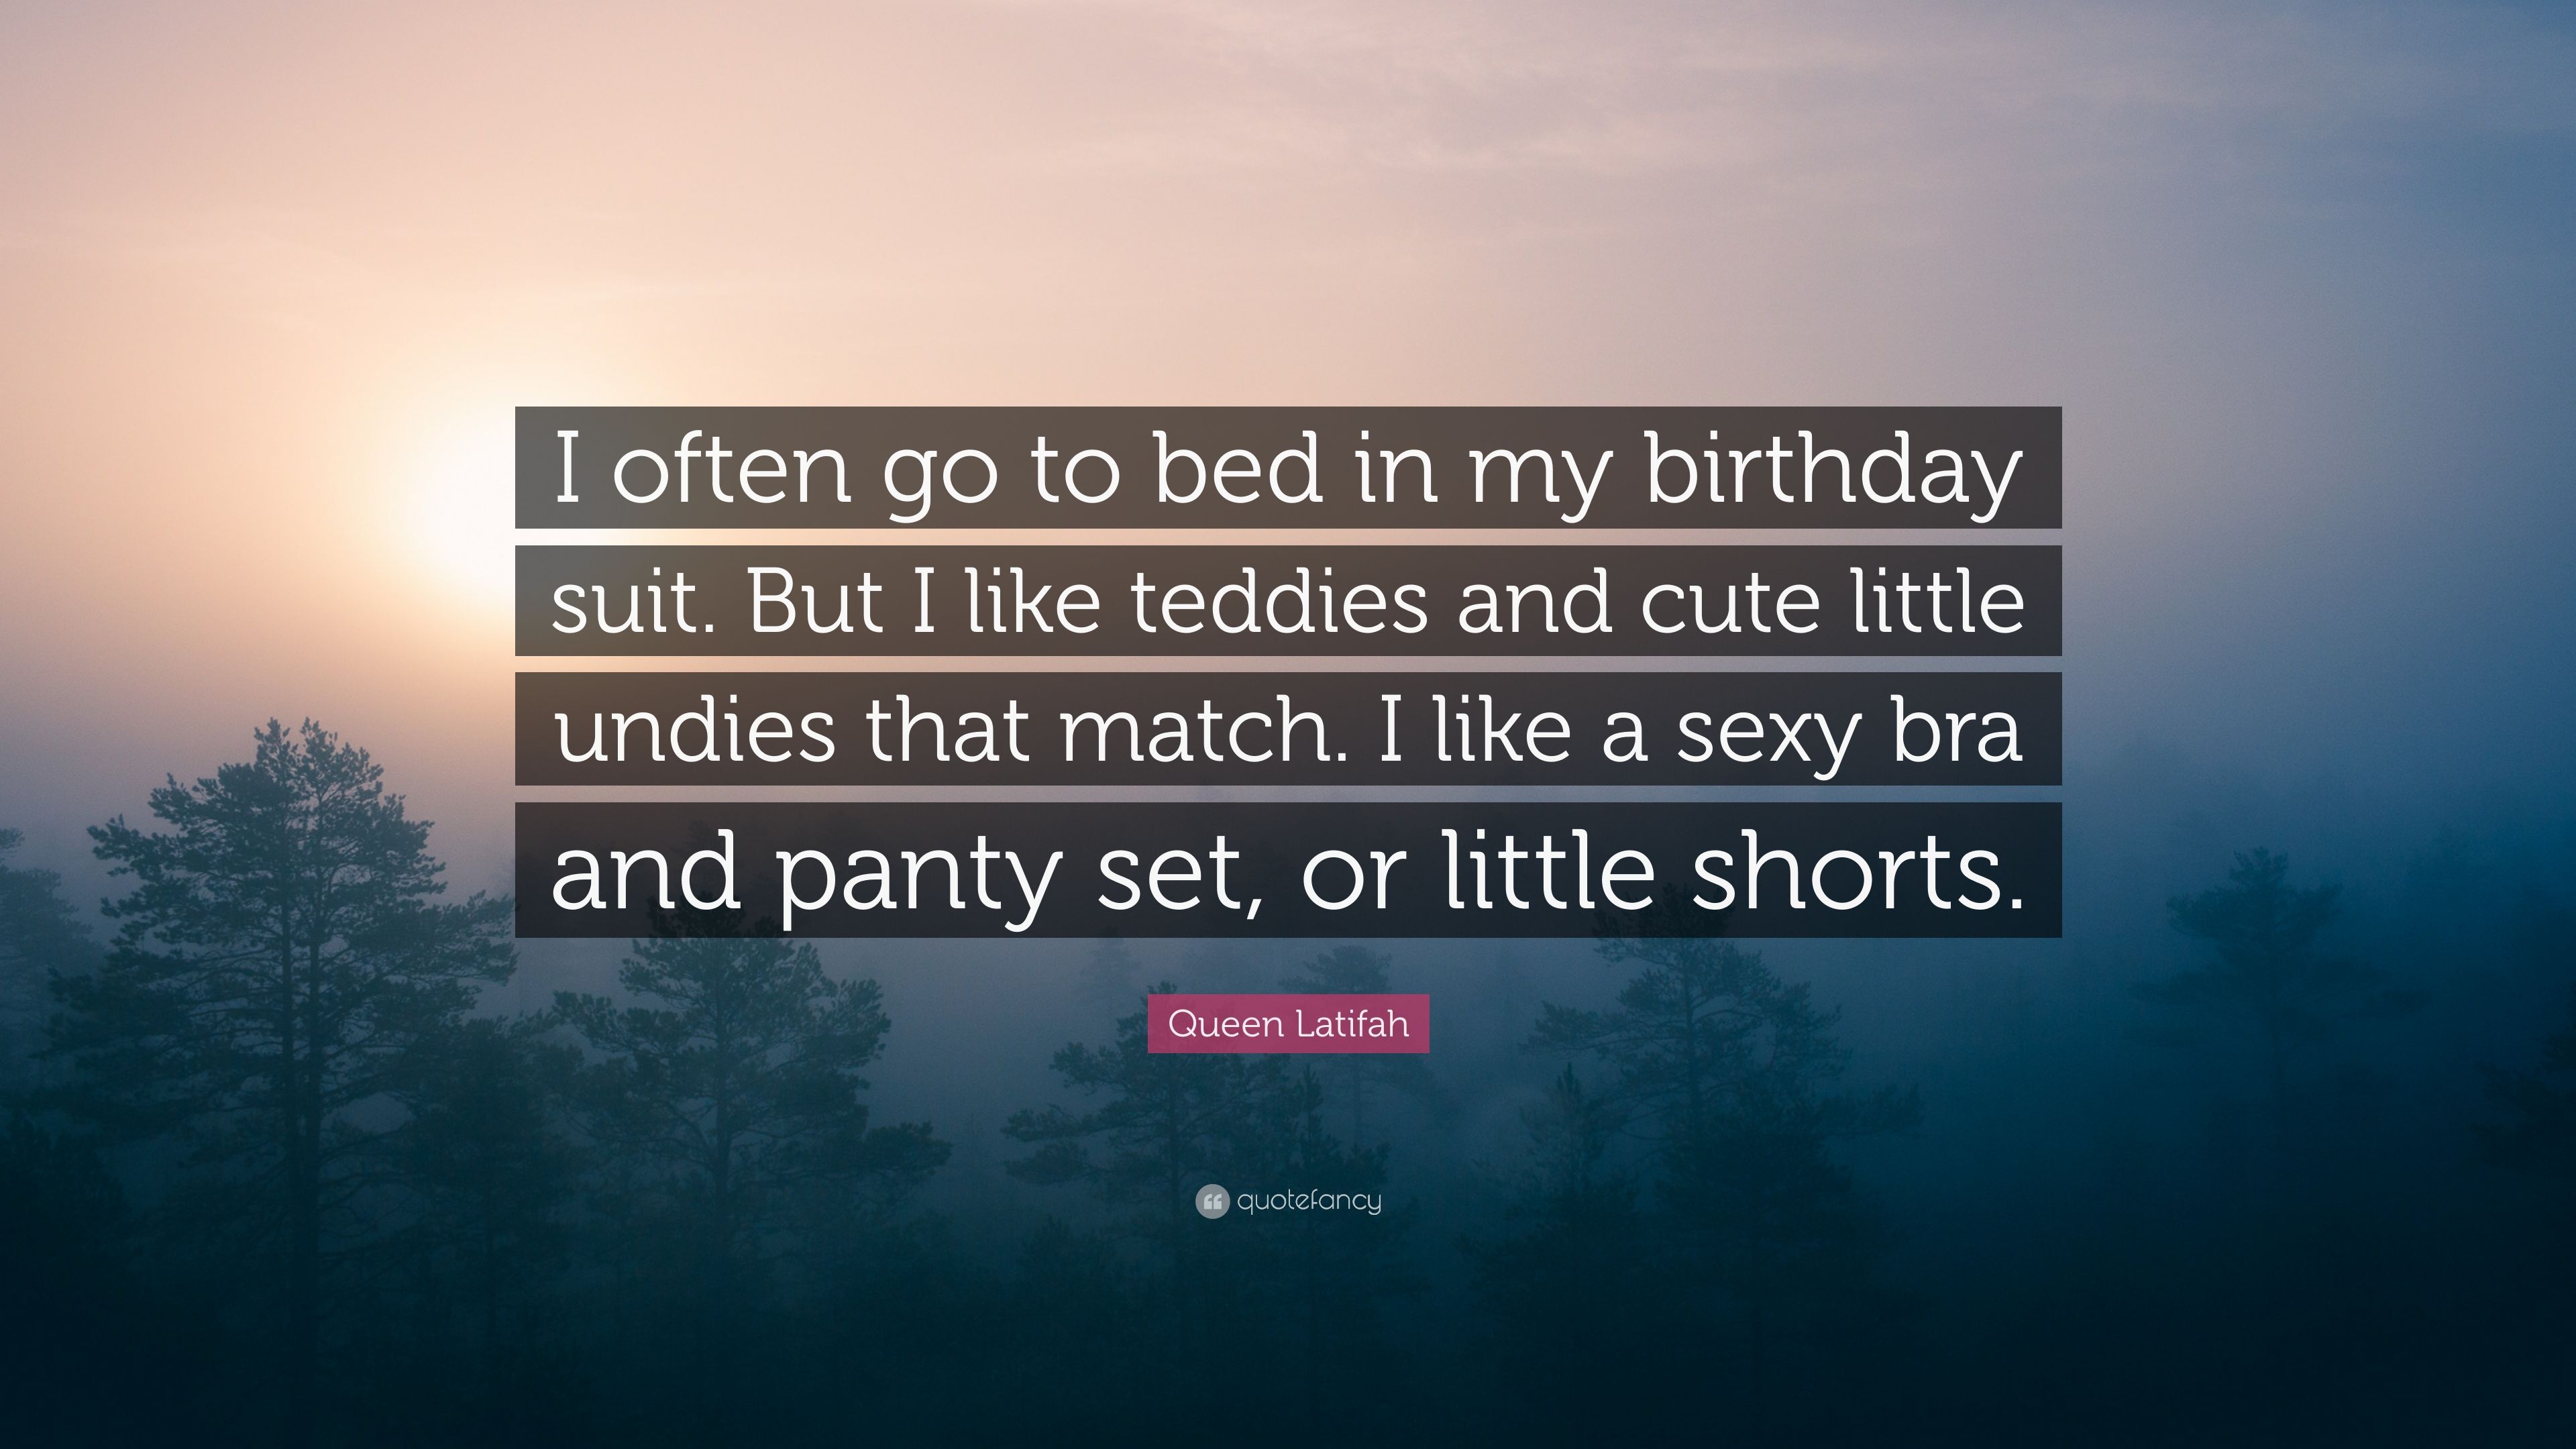 Queen Latifah Quote: “I often go to bed in my birthday suit. But I